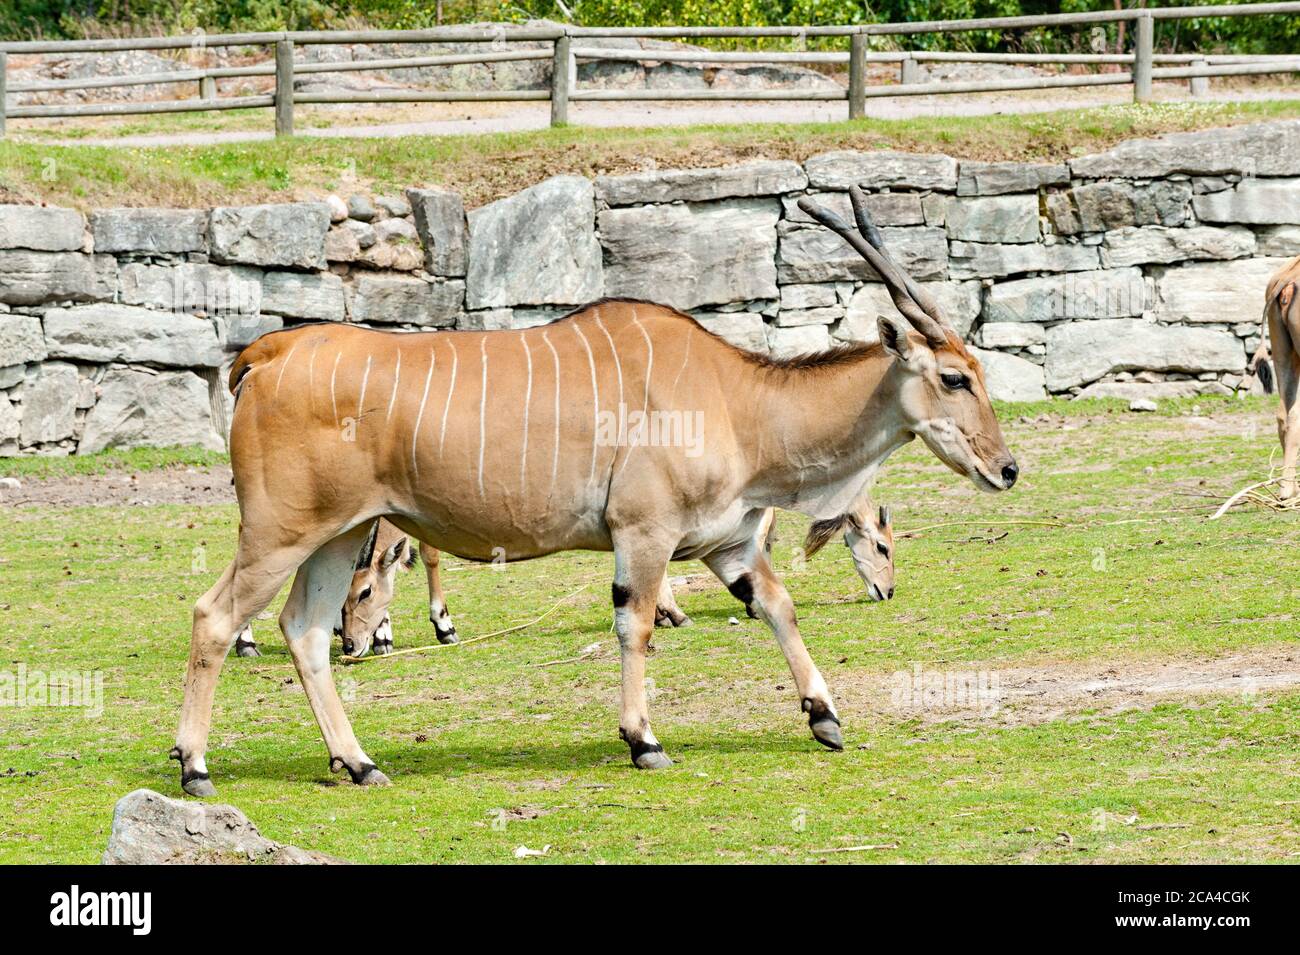 The common eland (Taurotragus oryx). Stock Photo